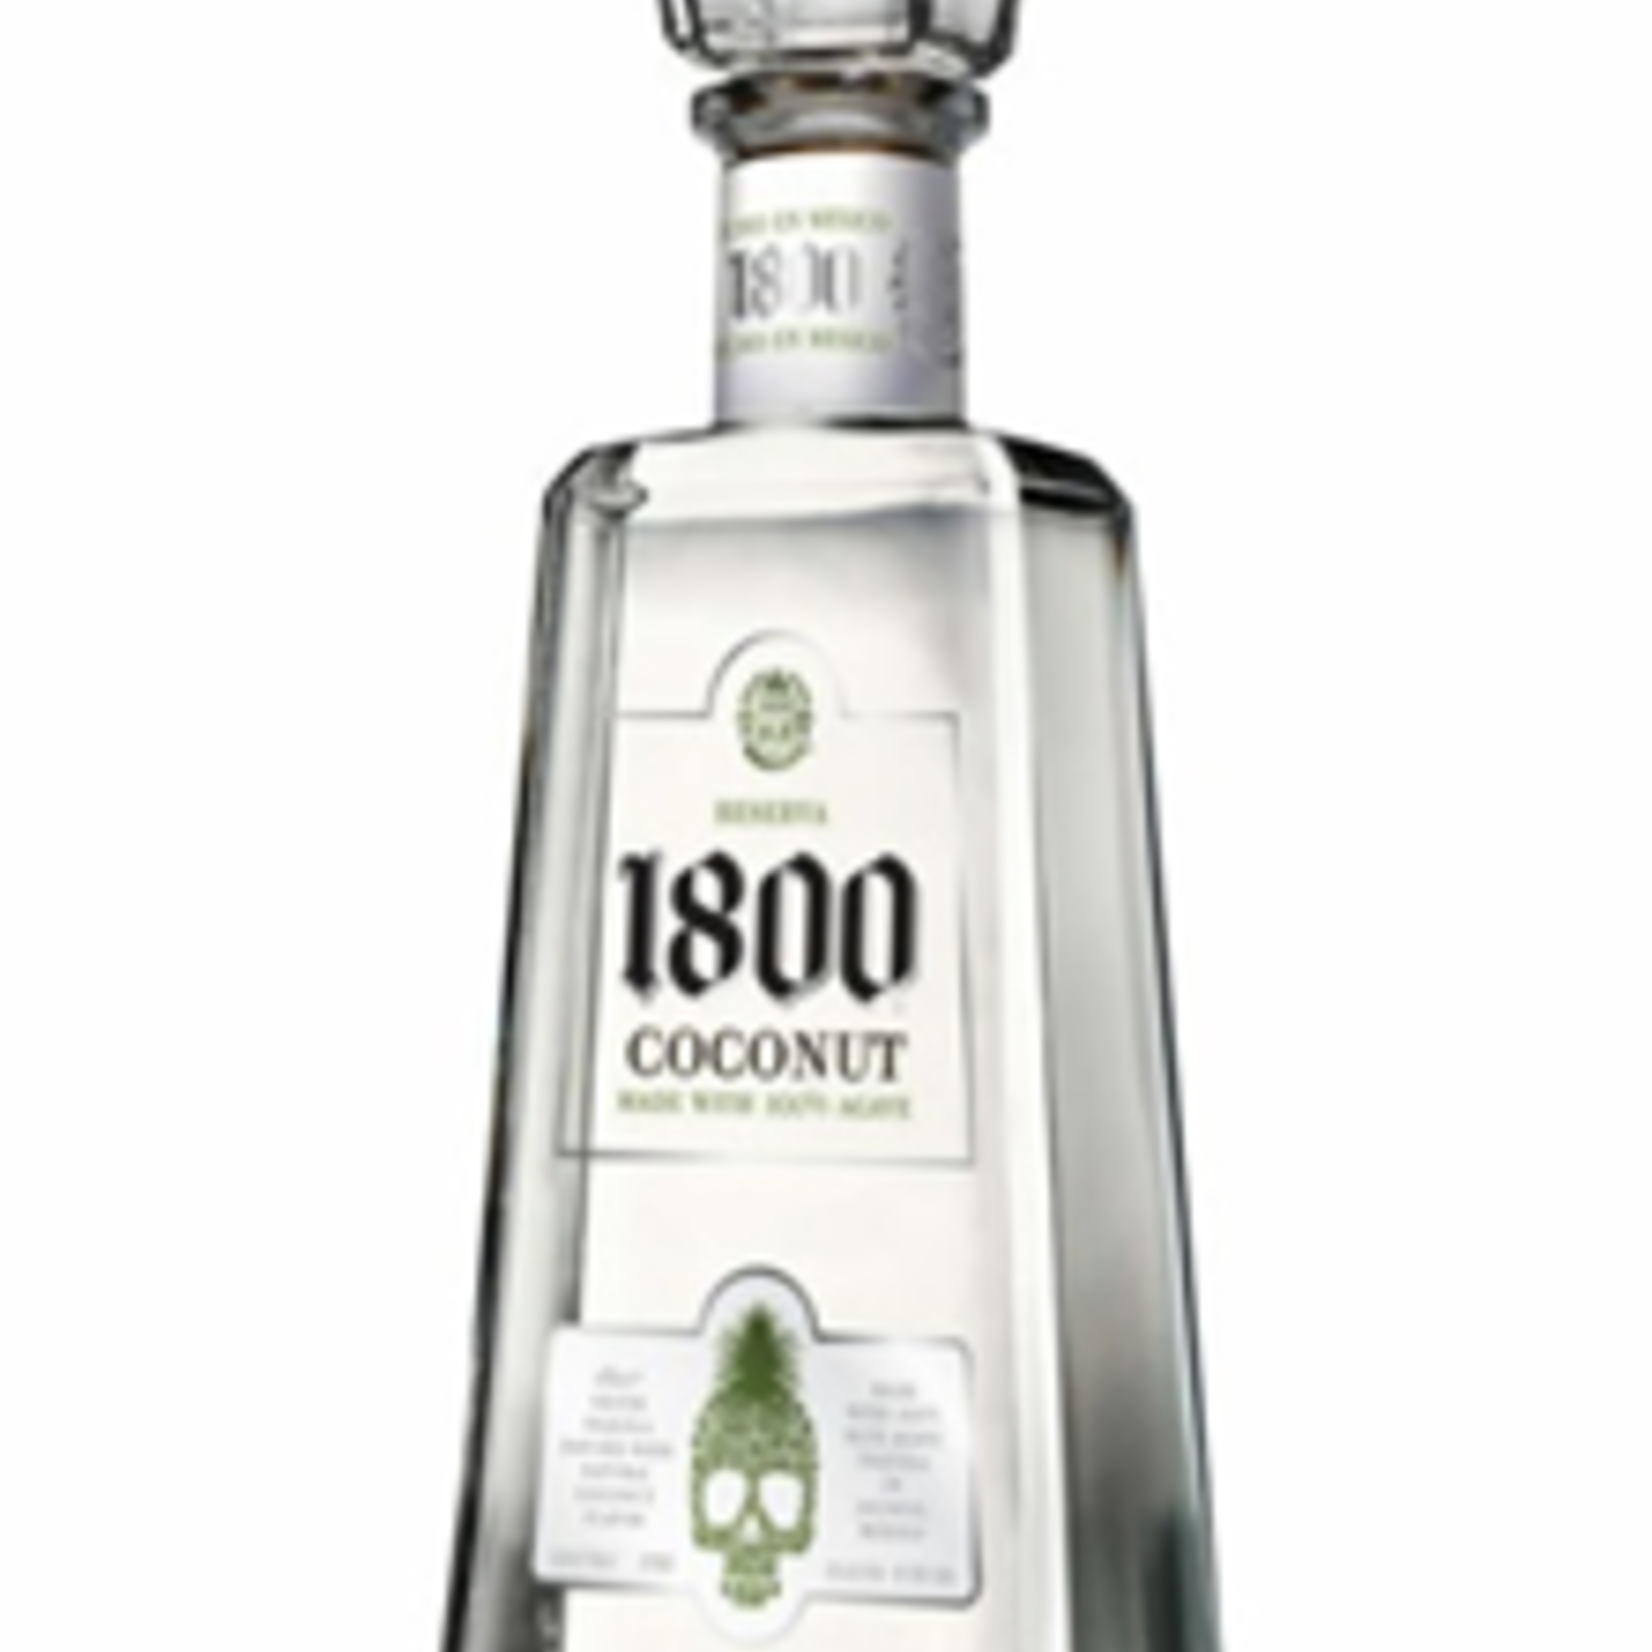 1800 1800 Coconut Tequila 750 mL